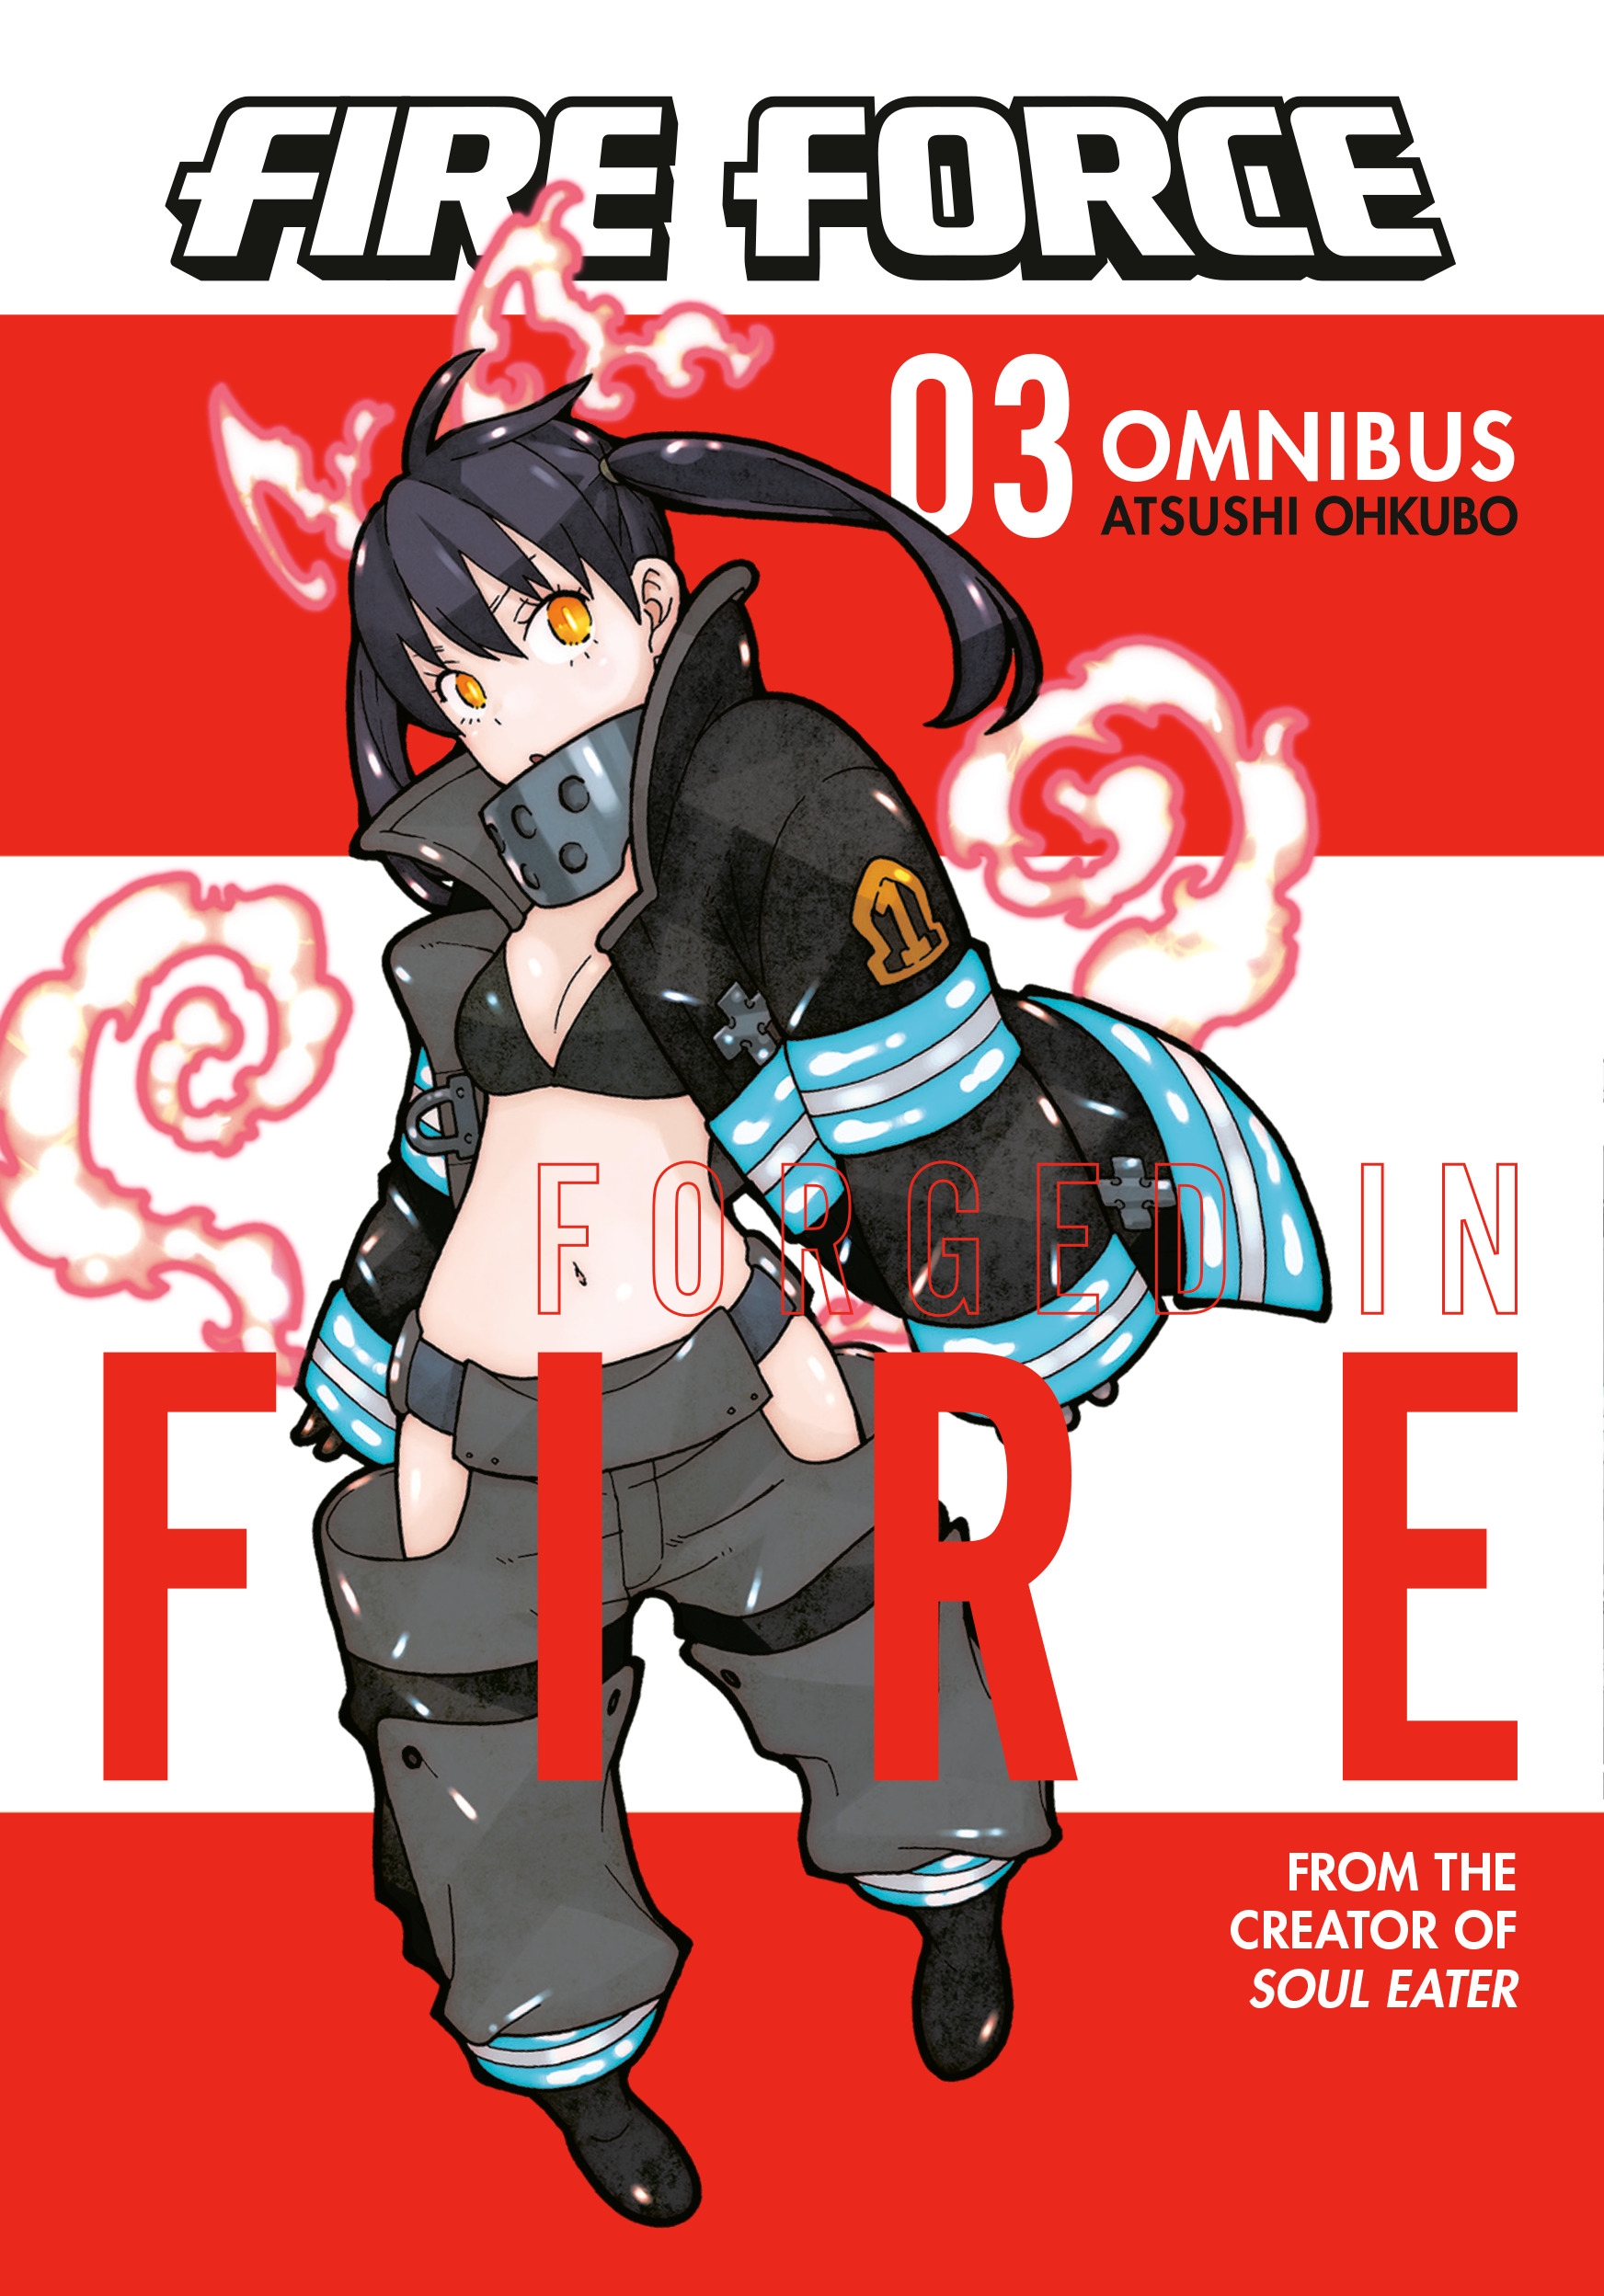 Fire Force Omnibus 3 (Vol. 7-9) by Atsushi Ohkubo - Penguin Books New  Zealand